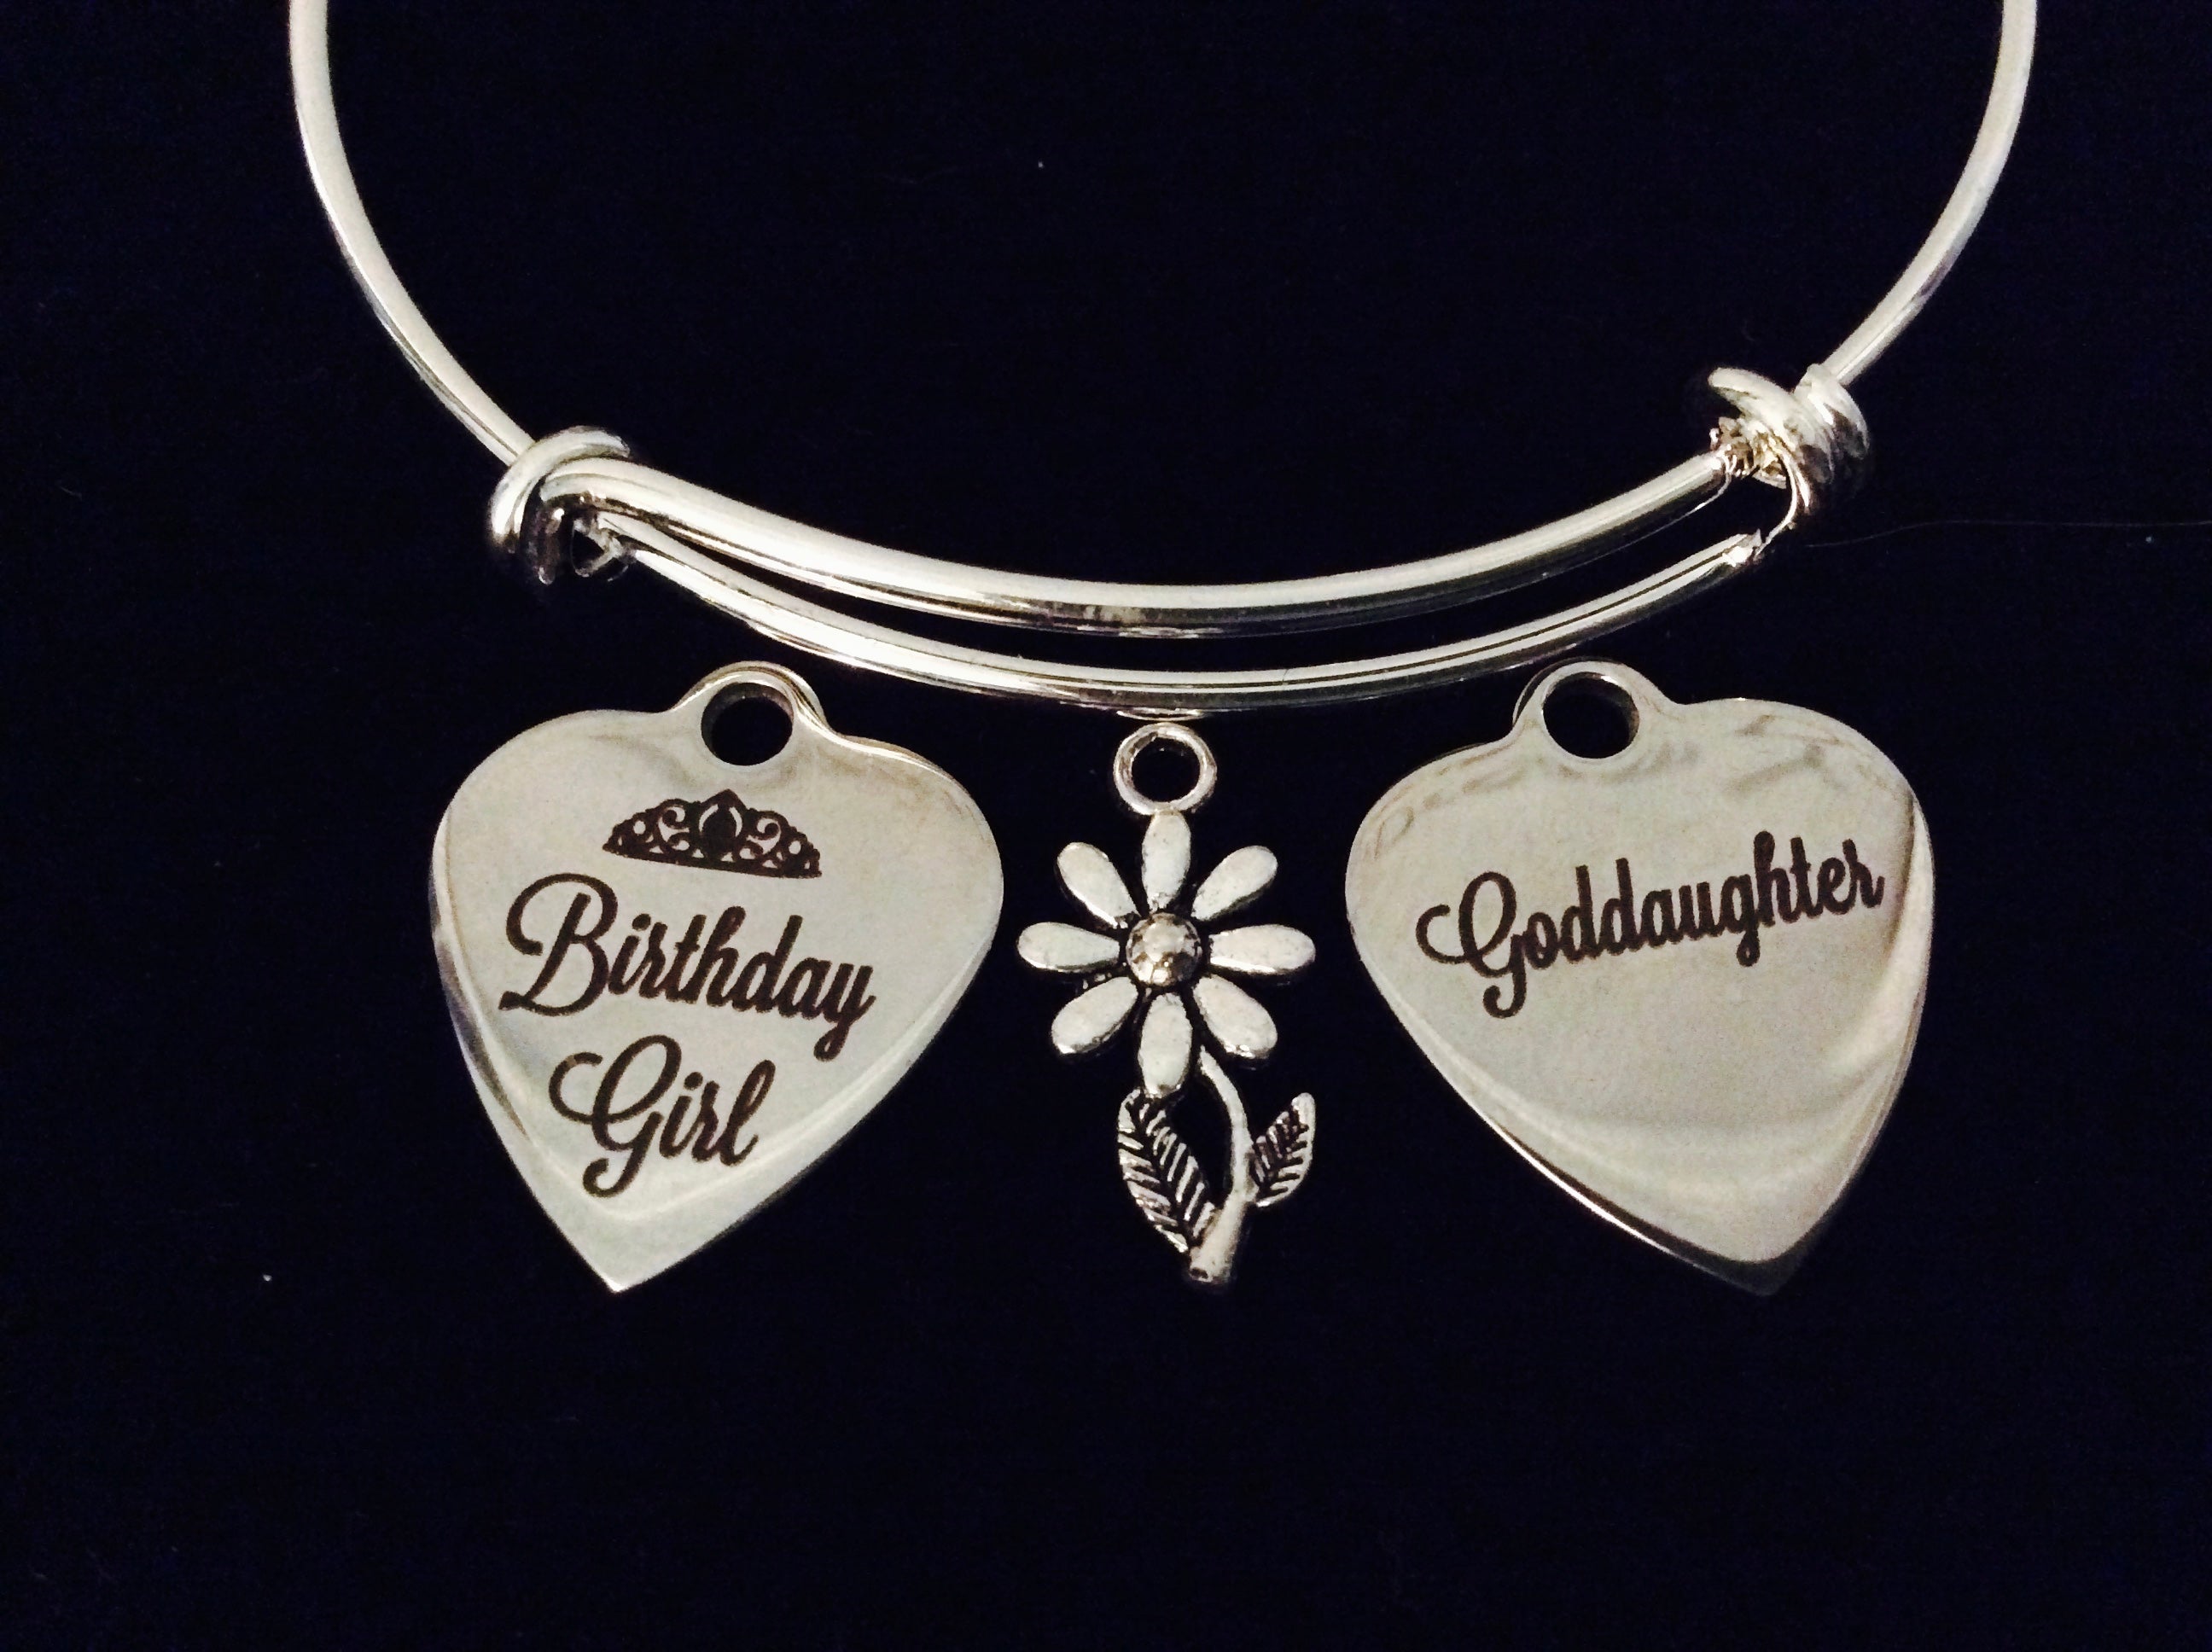 To My Daughter Fidget Bracelet Drive Away Your Anxiety Bracelet spinner  Bracelet birthday Gift gift for Her summer Jewelry Bracelet 